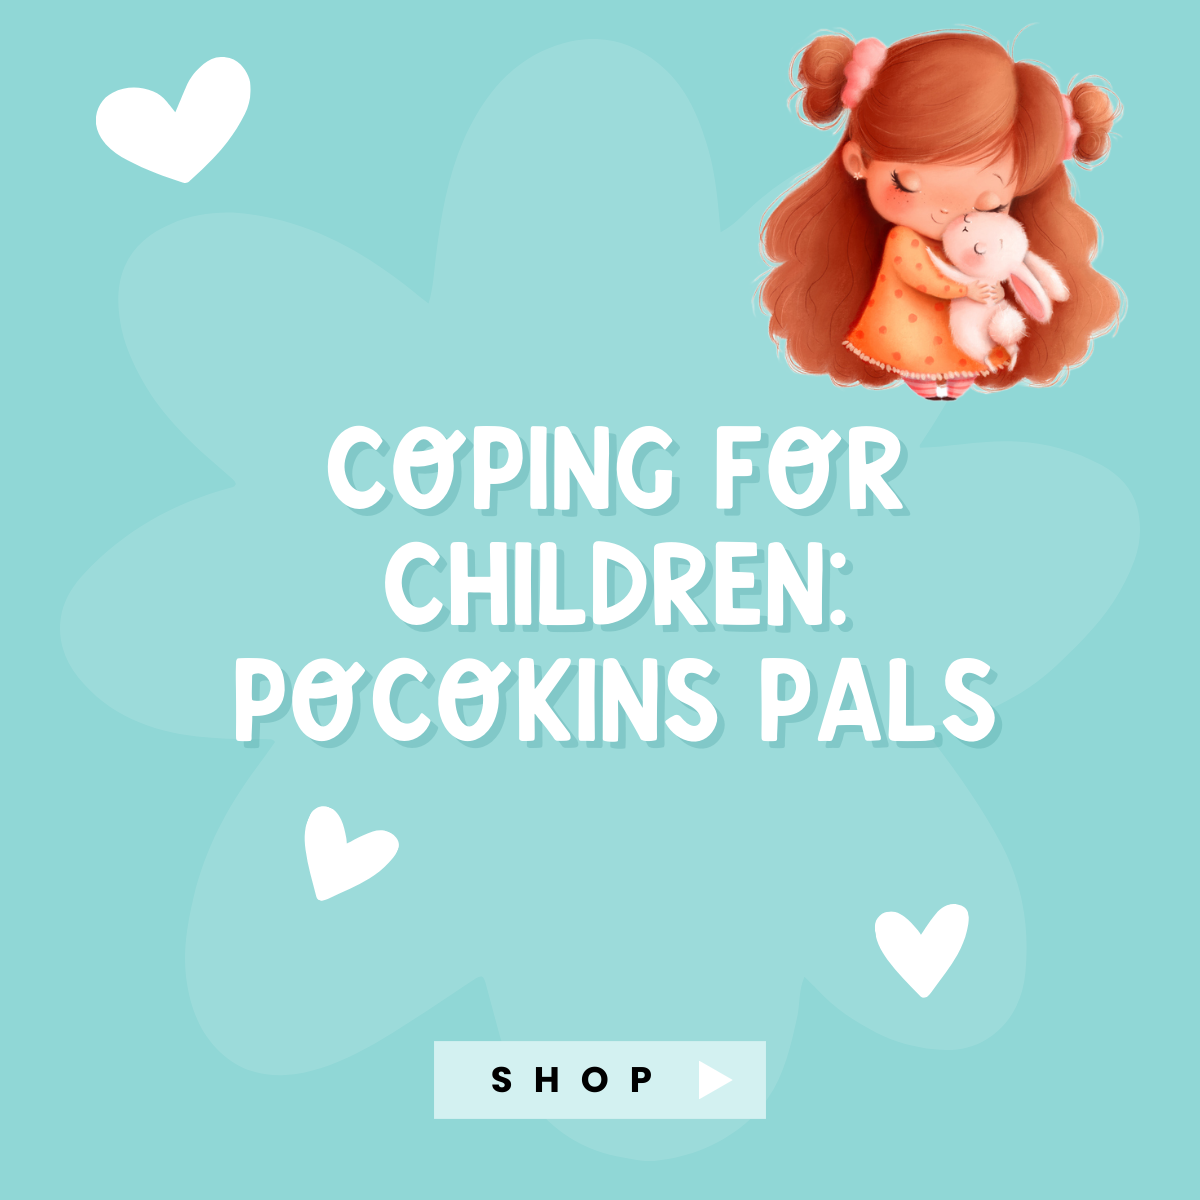 Coping for Children: PocoKins Pals